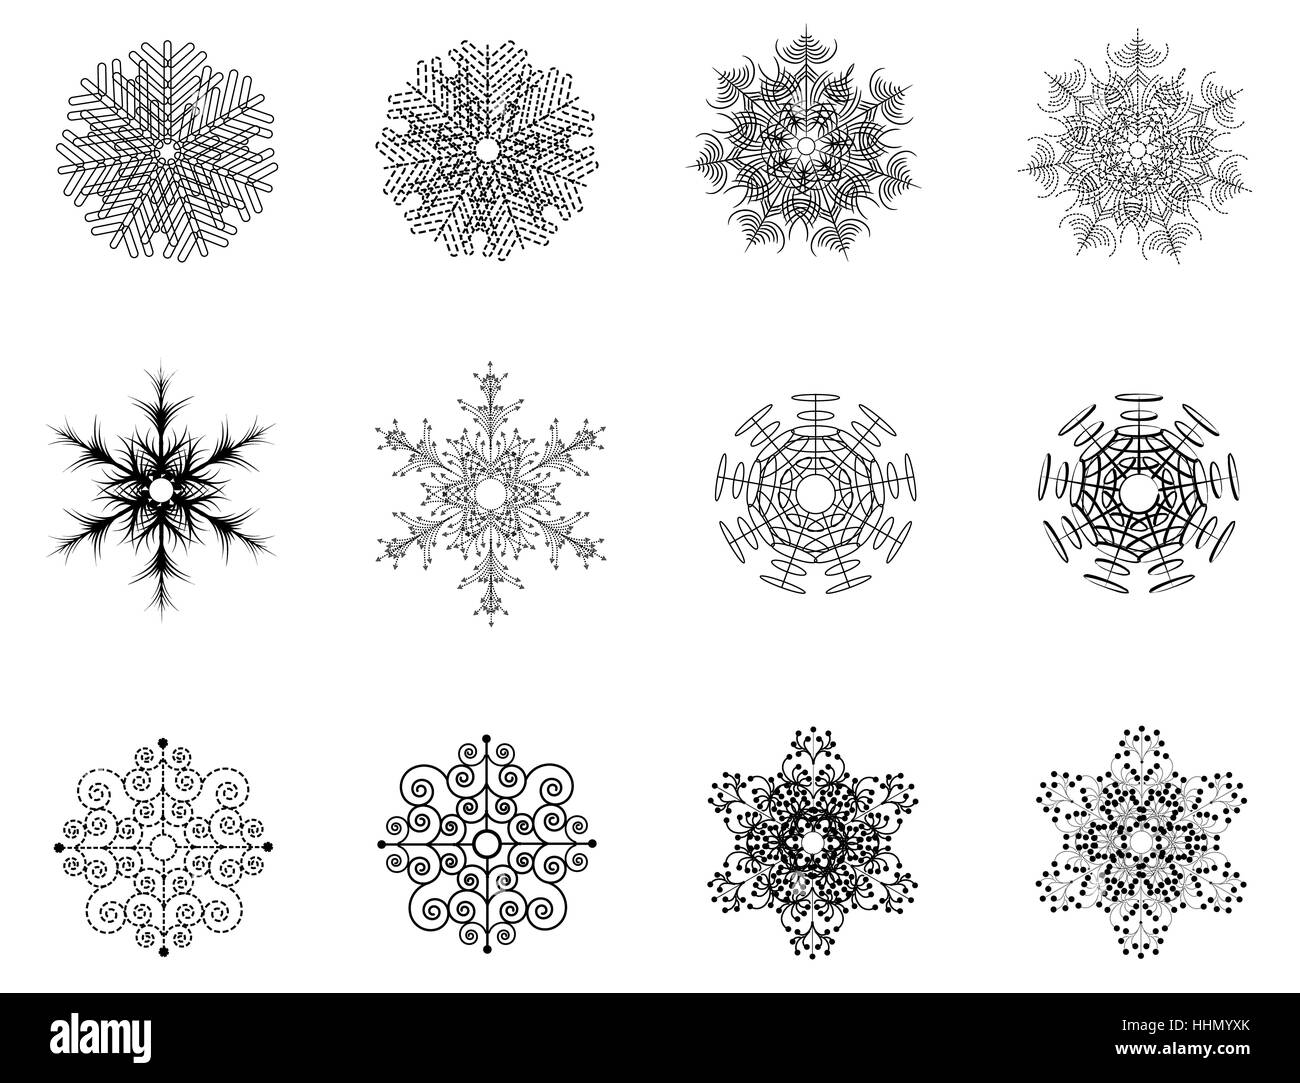 isolated, illustration, decoration, snowflake, lace, star, elements, design, Stock Photo